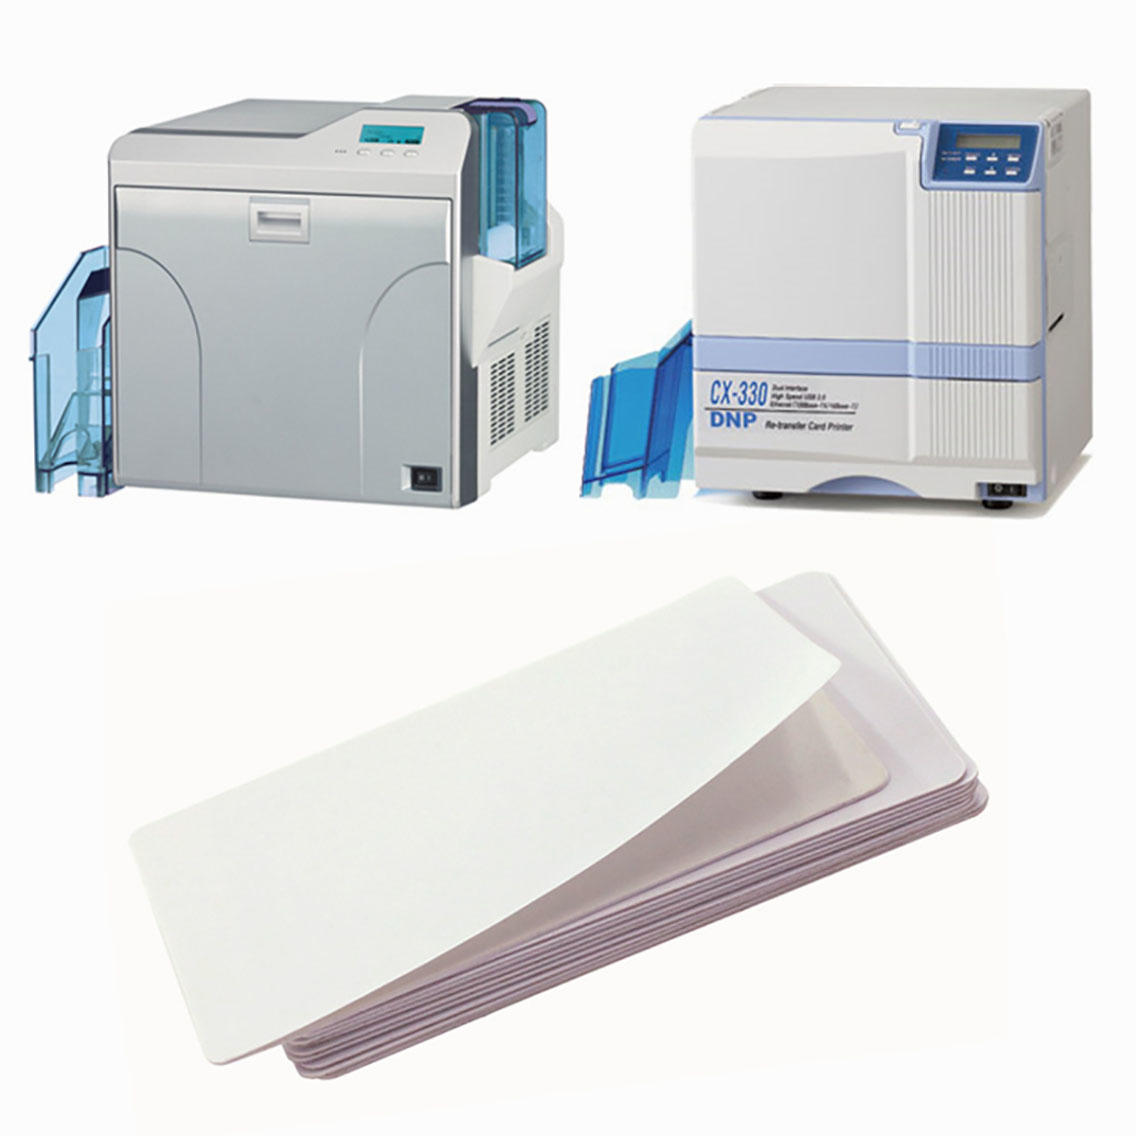 Cleanmo 3M Glue Dai Nippon Printer Cleaning Kits factory for DNP CX-210, CX-320 & CX-330 Printers